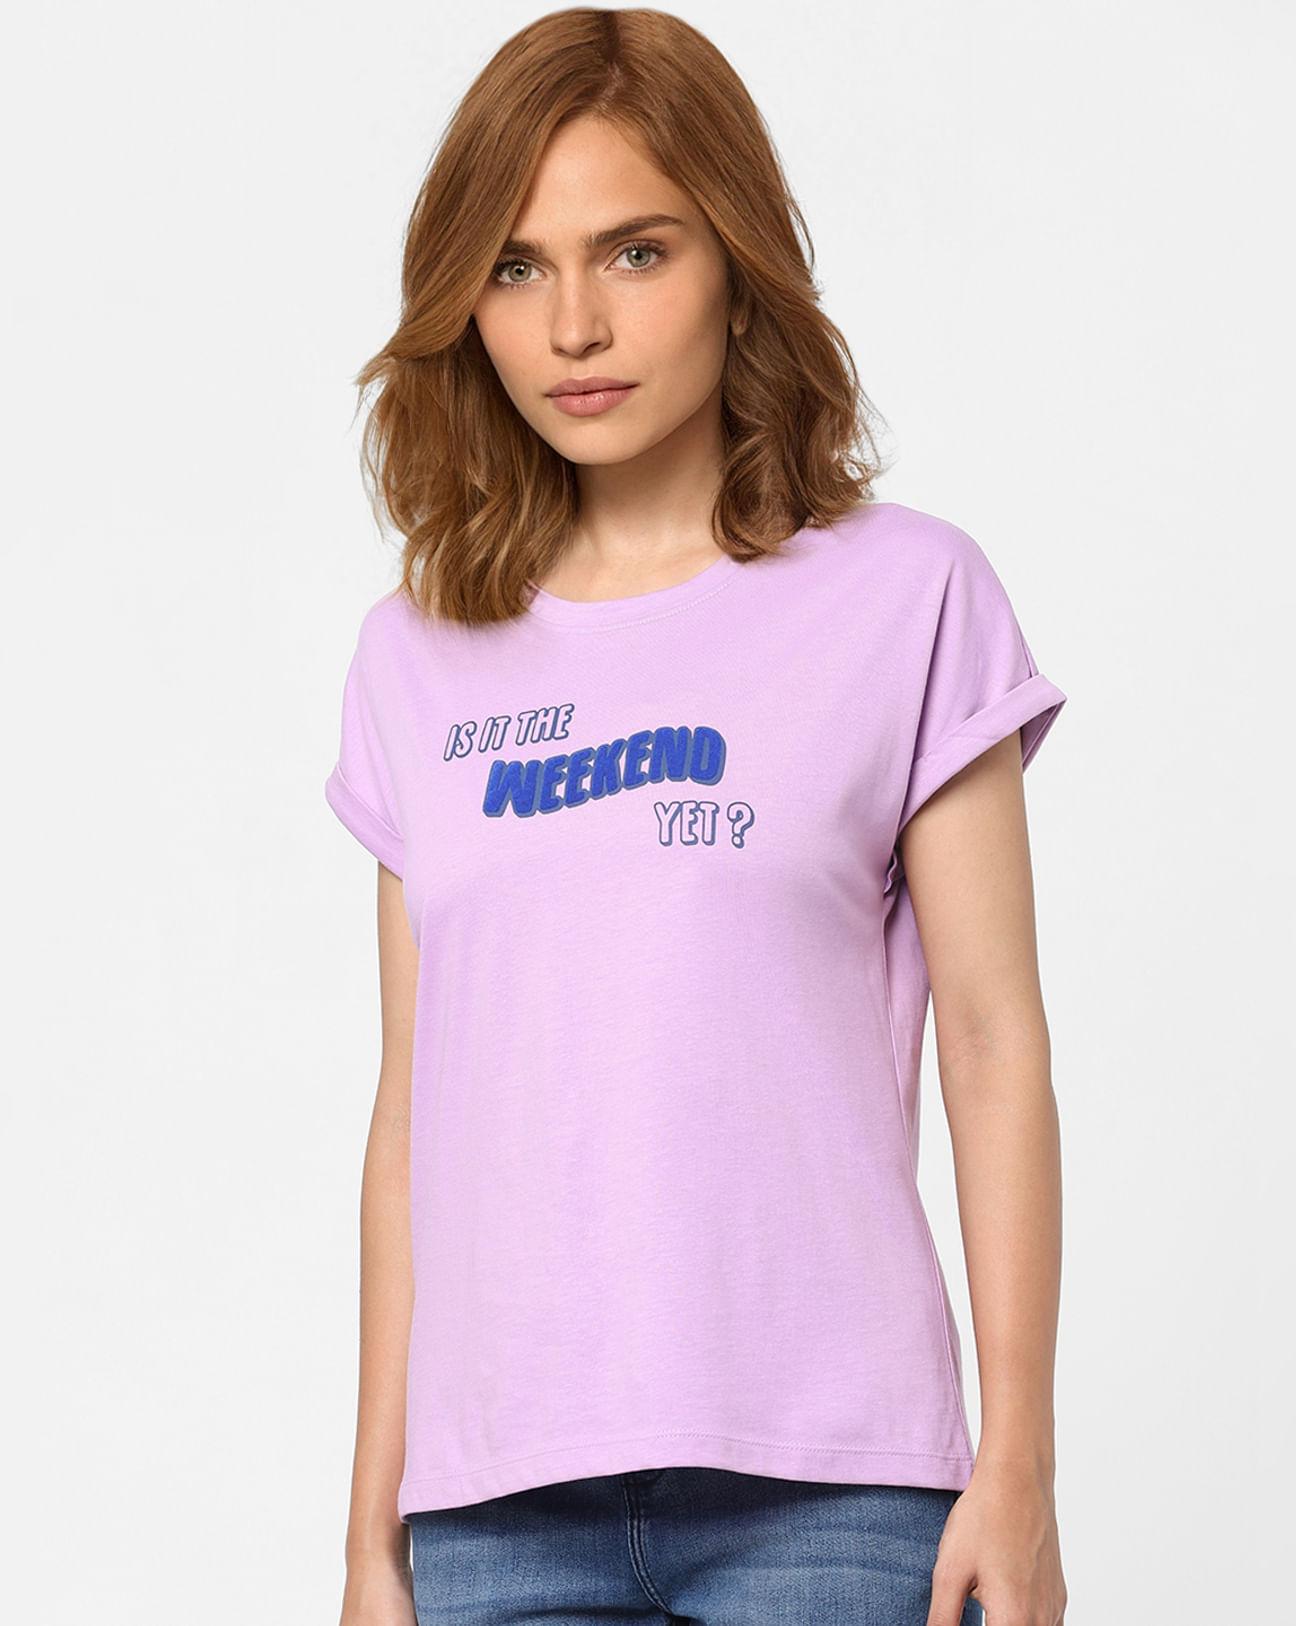 purple graphic print t-shirt